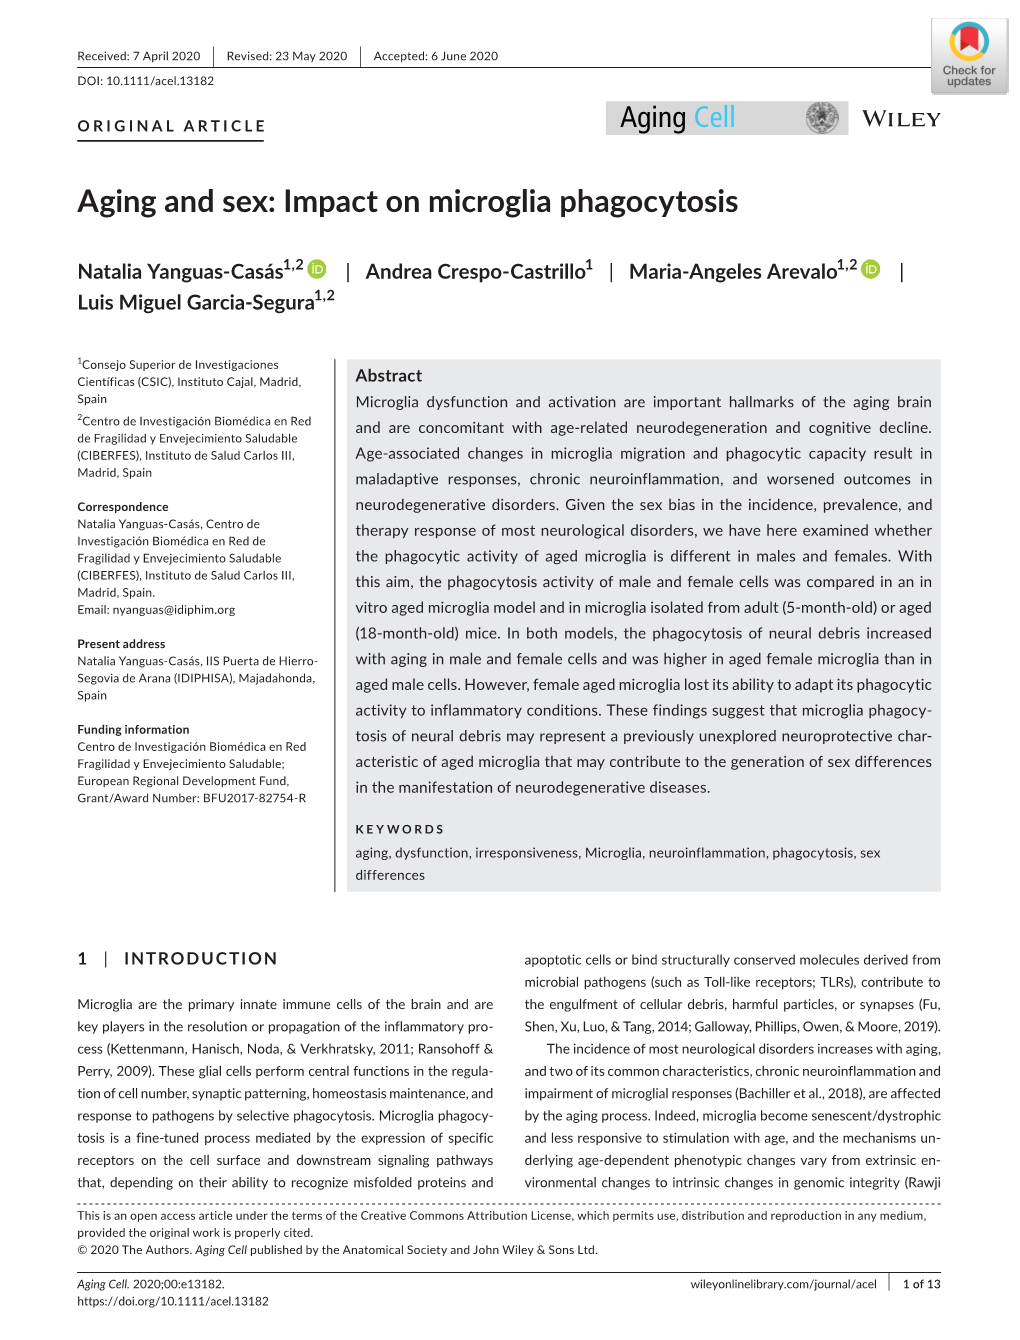 Aging and Sex: Impact on Microglia Phagocytosis